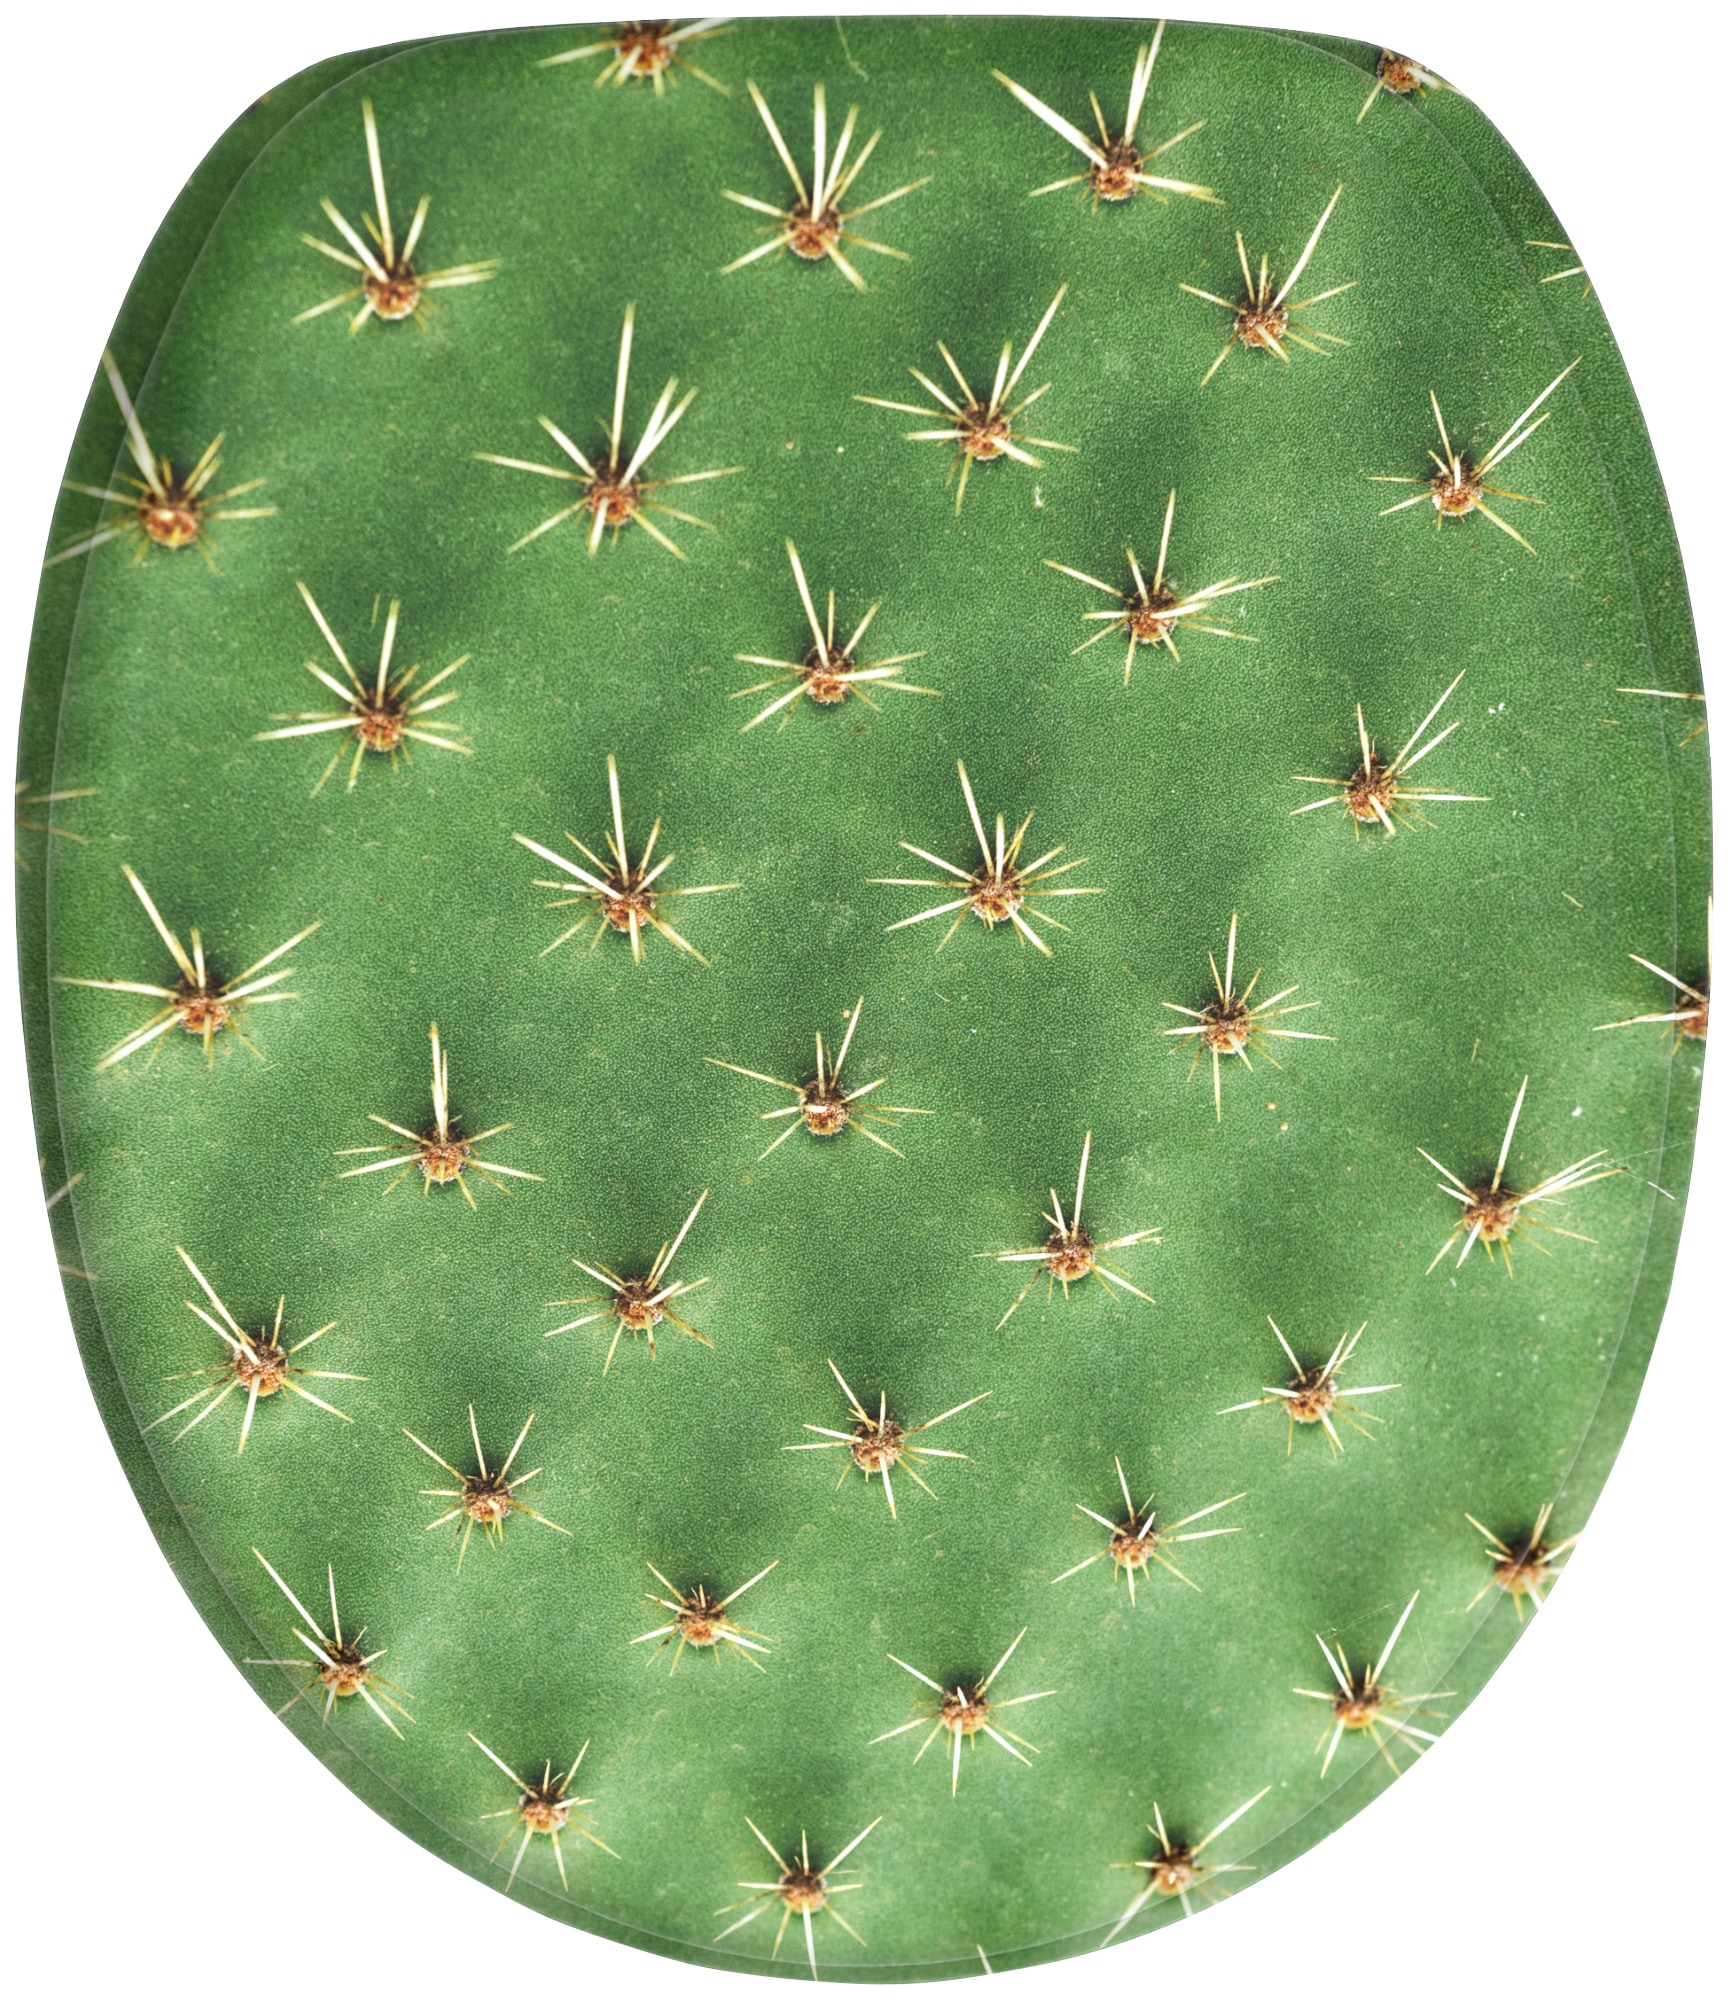 WC-Sitz »Kaktus«, mit Absenkautomatik, BxL: 37,7 x 42,0 - 47,0 cm